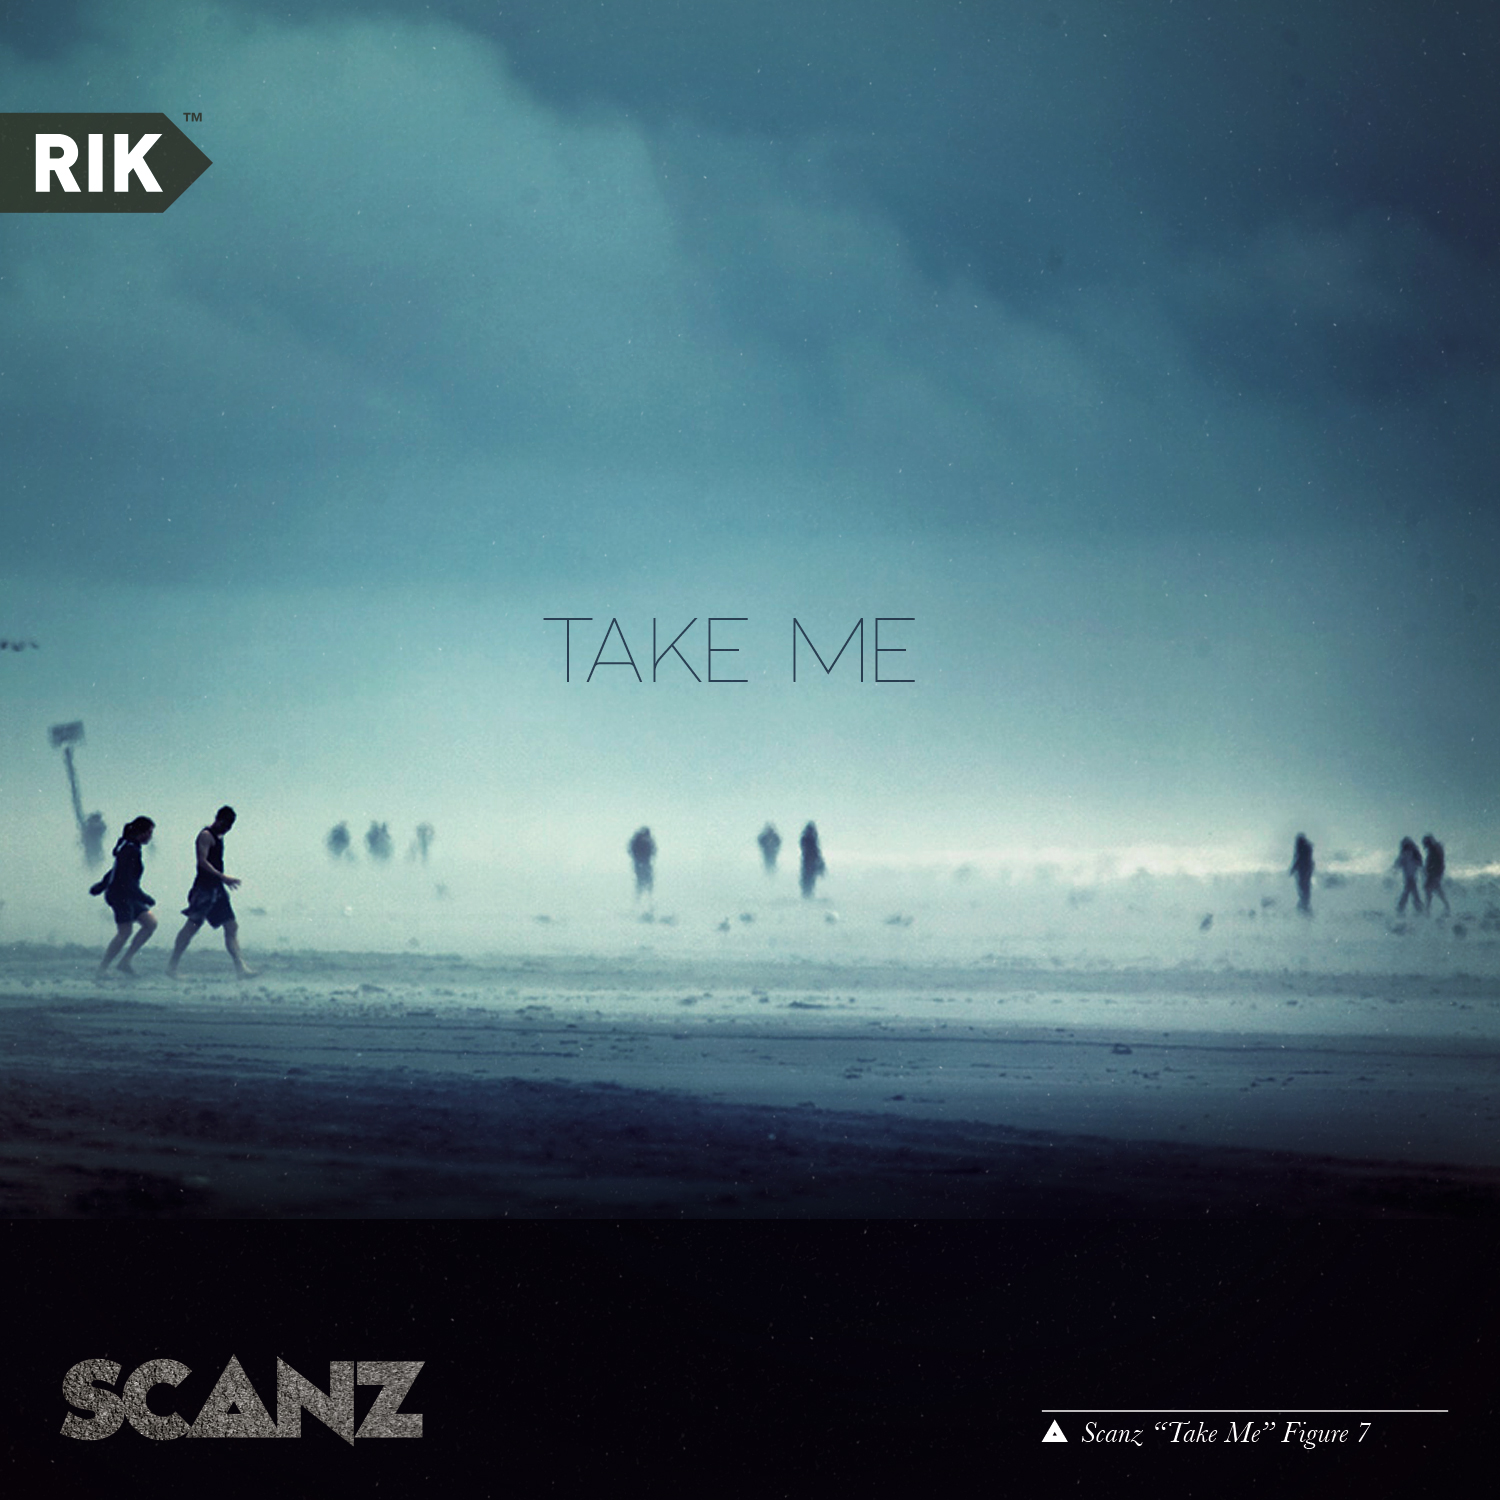 Scanz — “Take Me” featuring Selina Carrera